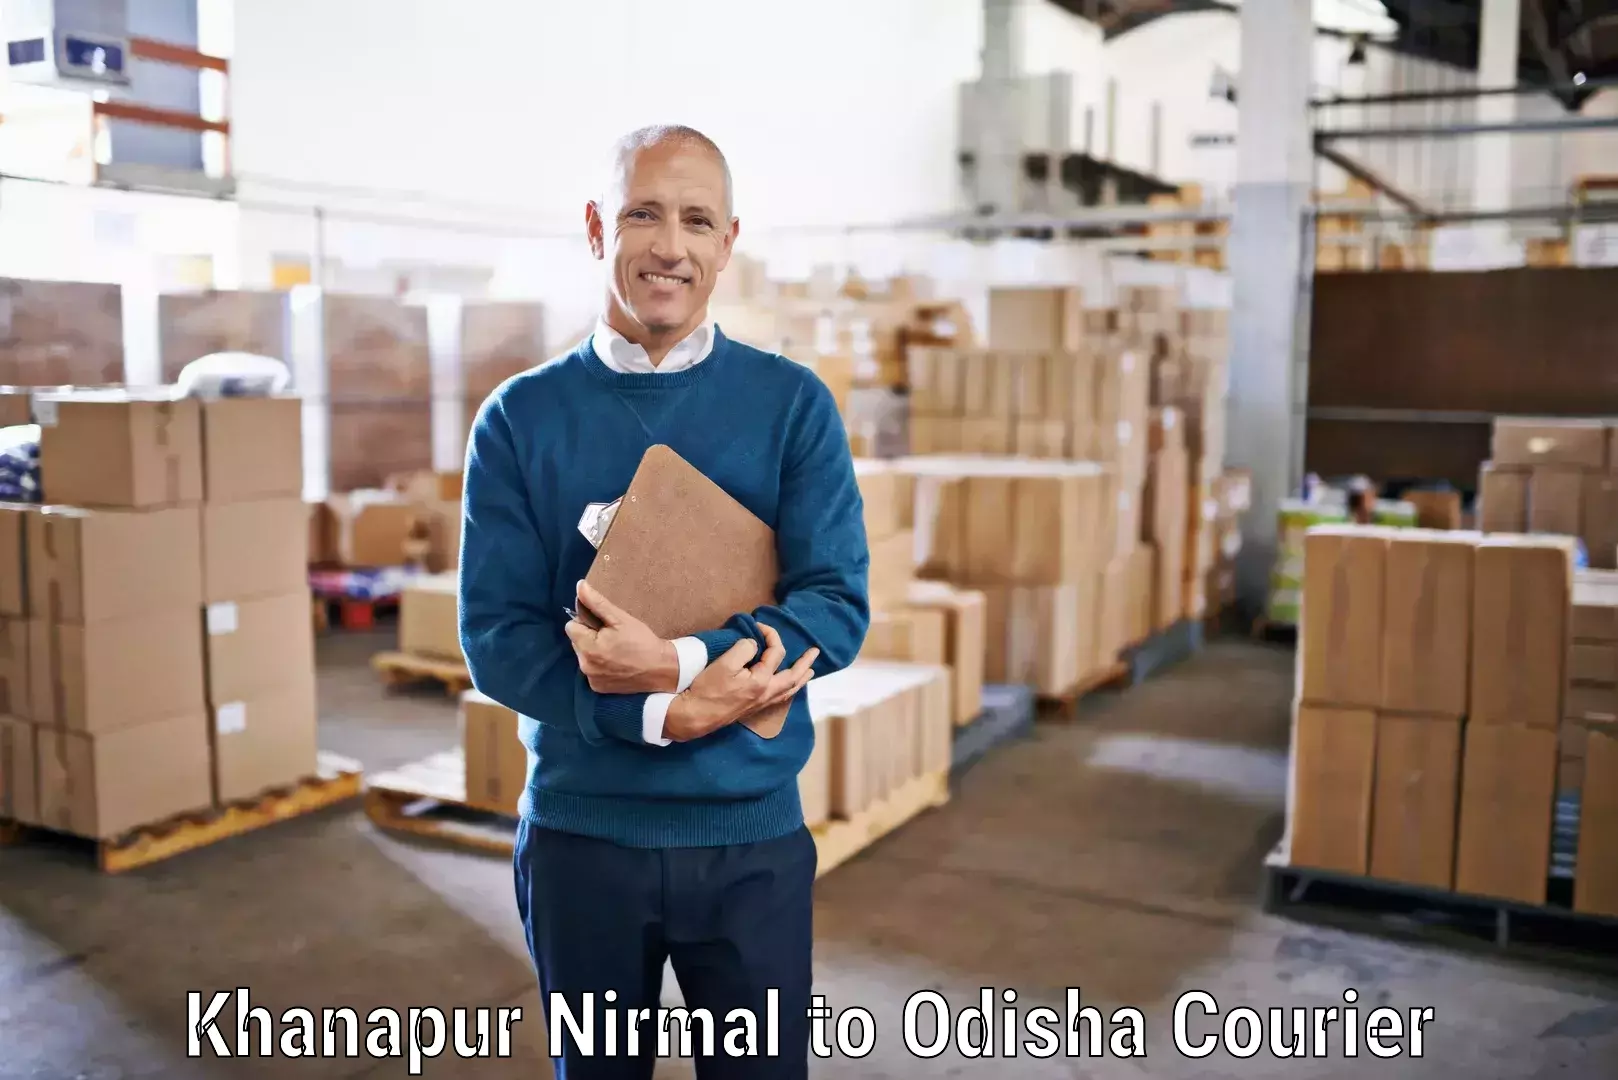 Reliable freight solutions Khanapur Nirmal to Kendrapara